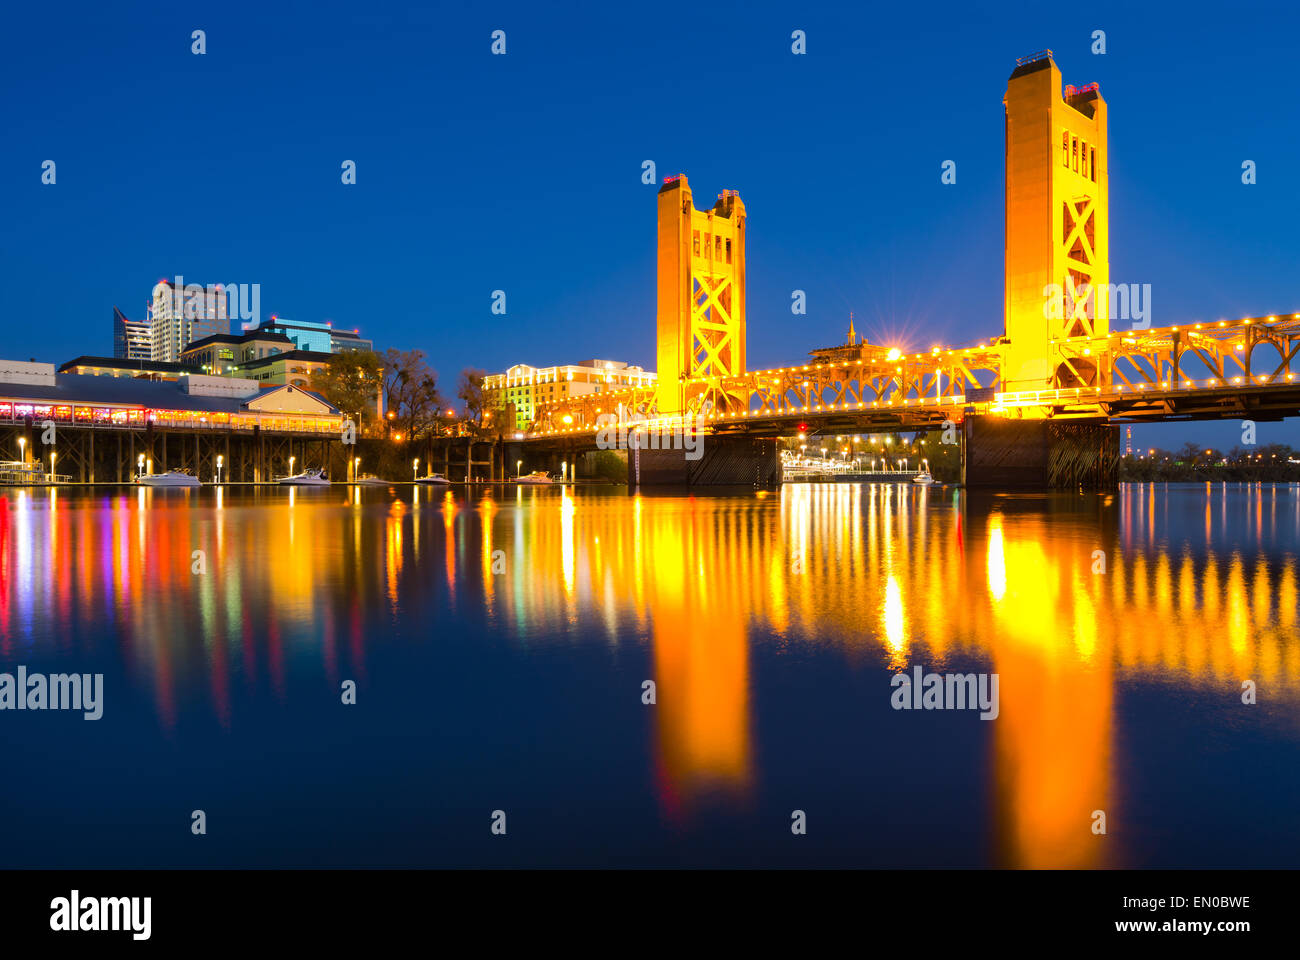 Sacramento California at night Stock Photo